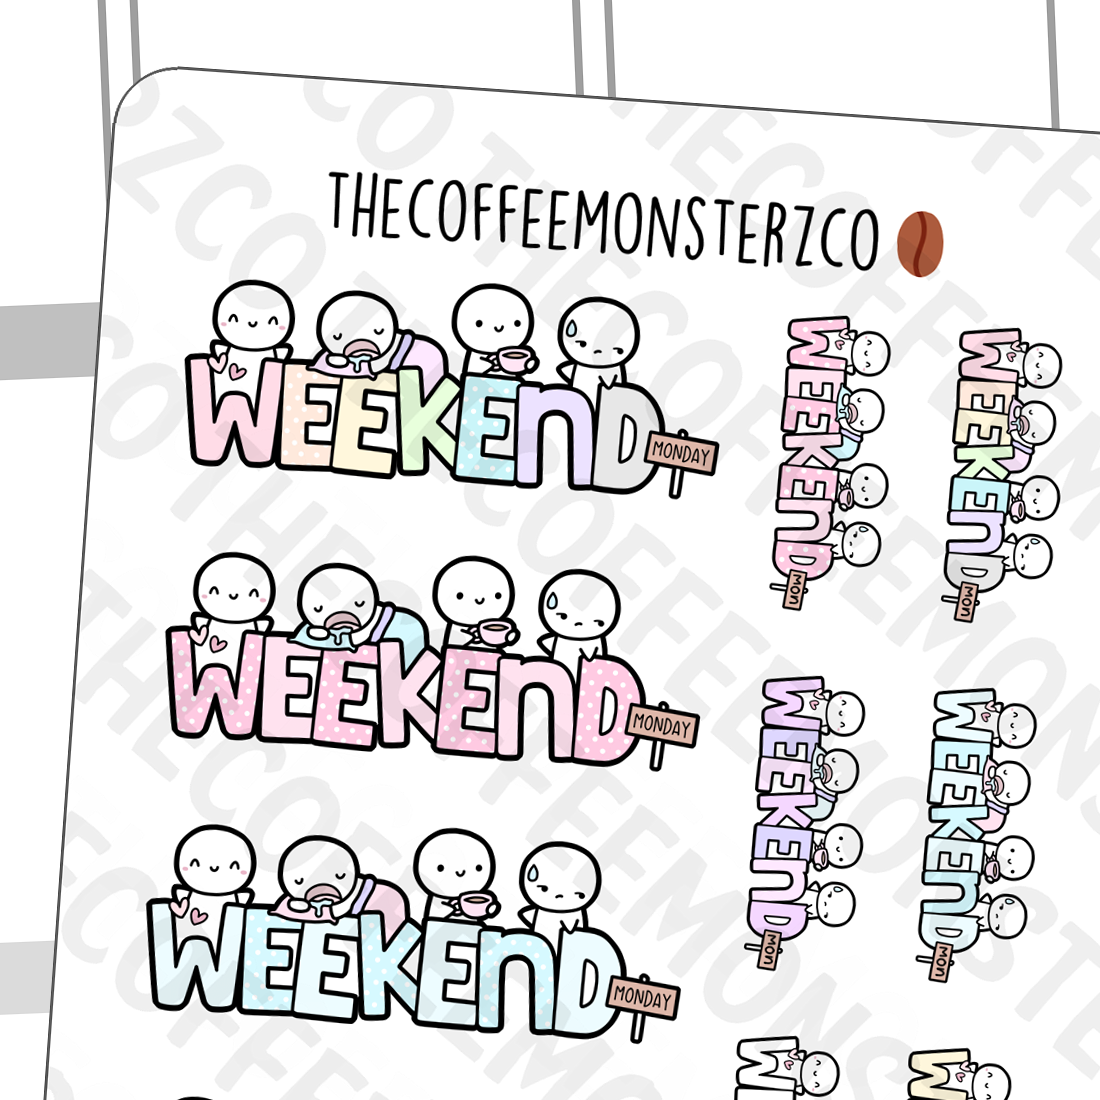 A Very Short Weekend! Emoti Weekend Banner - TheCoffeeMonsterzCo